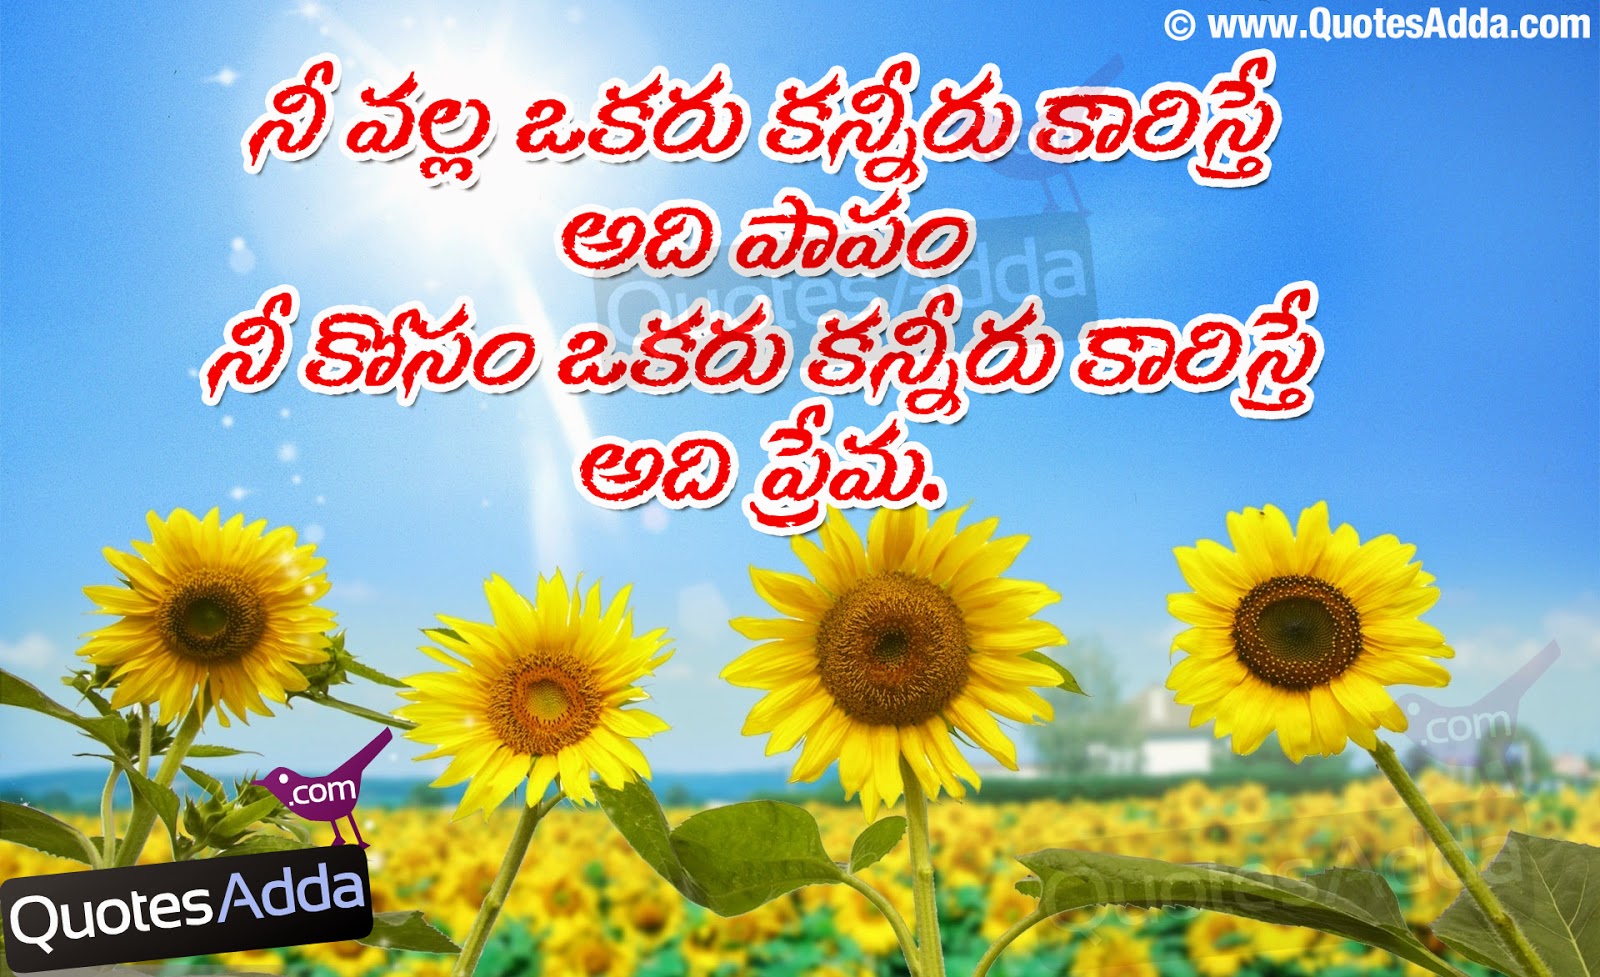 Telugu Life Love Sad Meaning quotations JUL04 QuotesAdda